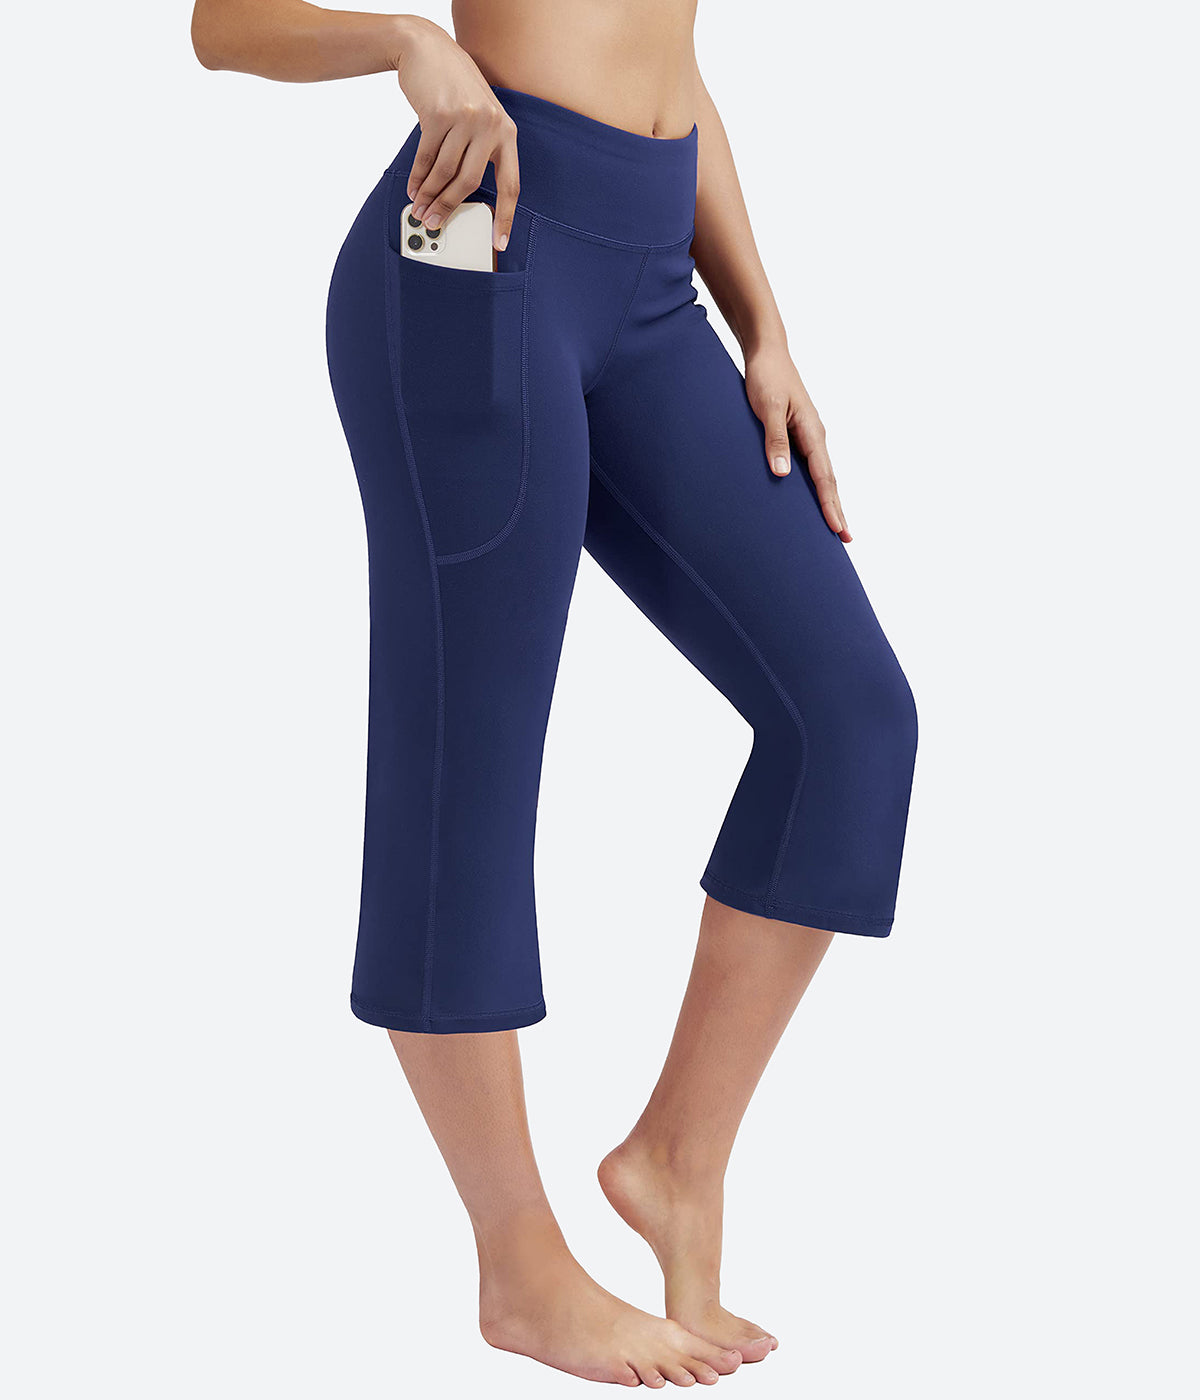 Kcutteyg Yoga Pants for Women with Pockets High Large, Capri